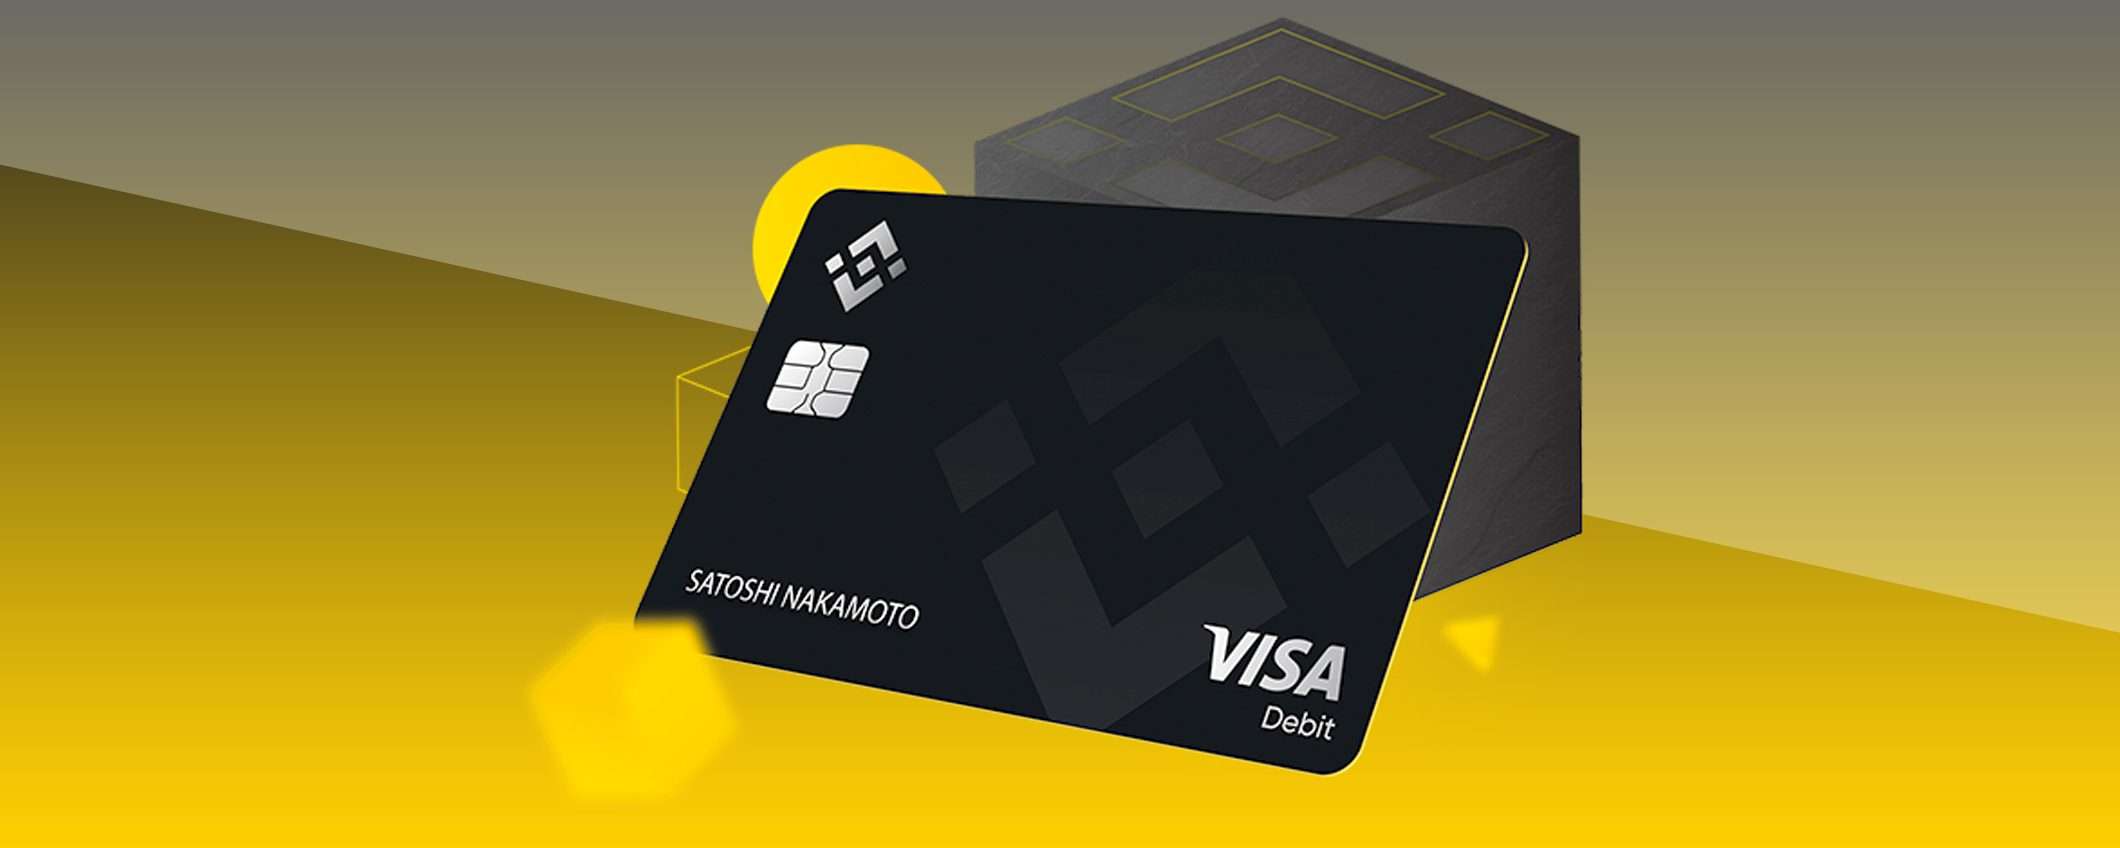 Binance Card ora supporta anche XRP, SHIB e AVAX